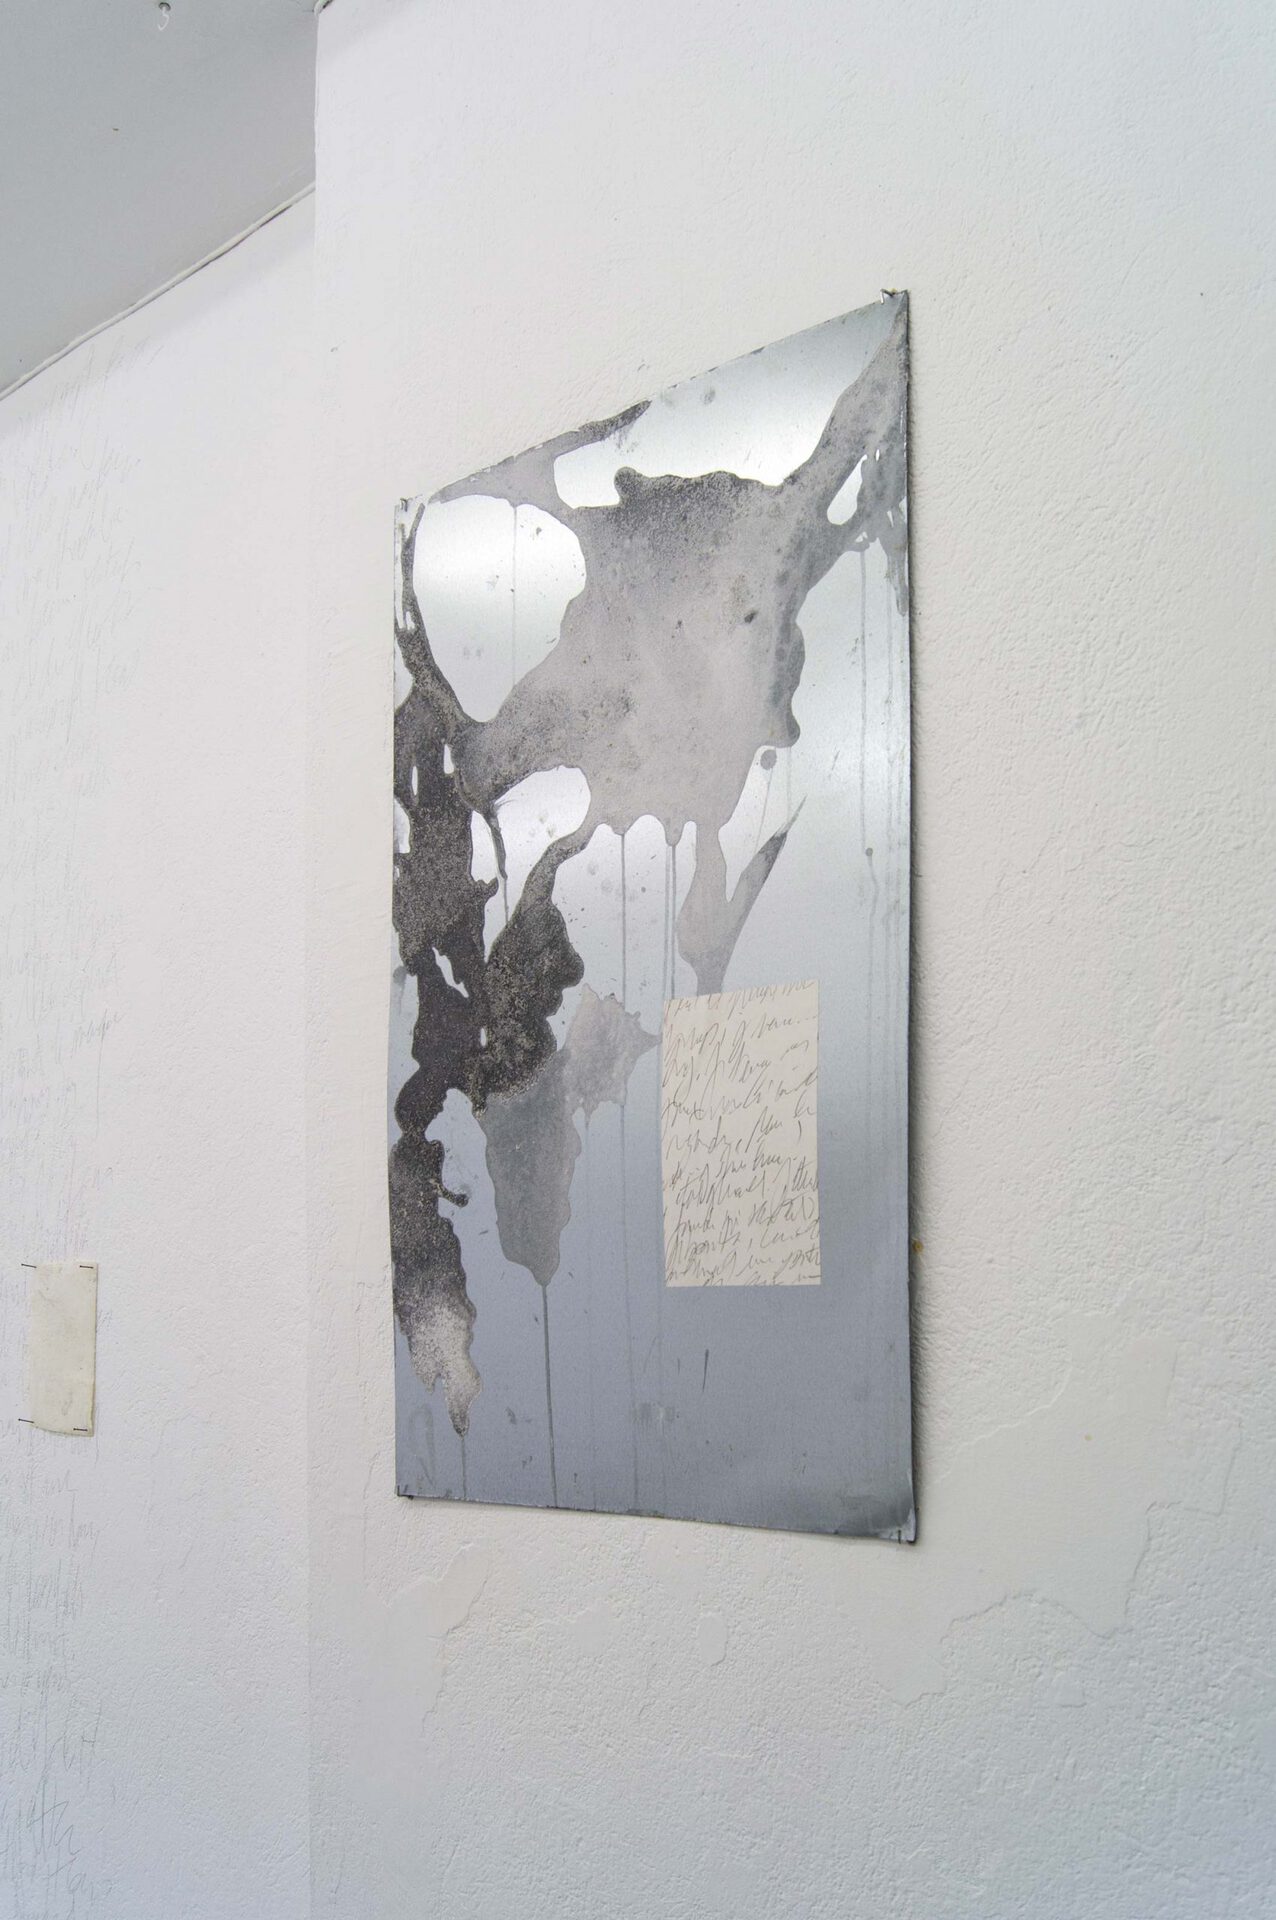 Bind, sea water evaporated on steel, salt, graphite on paper, 60x100cm, 2021